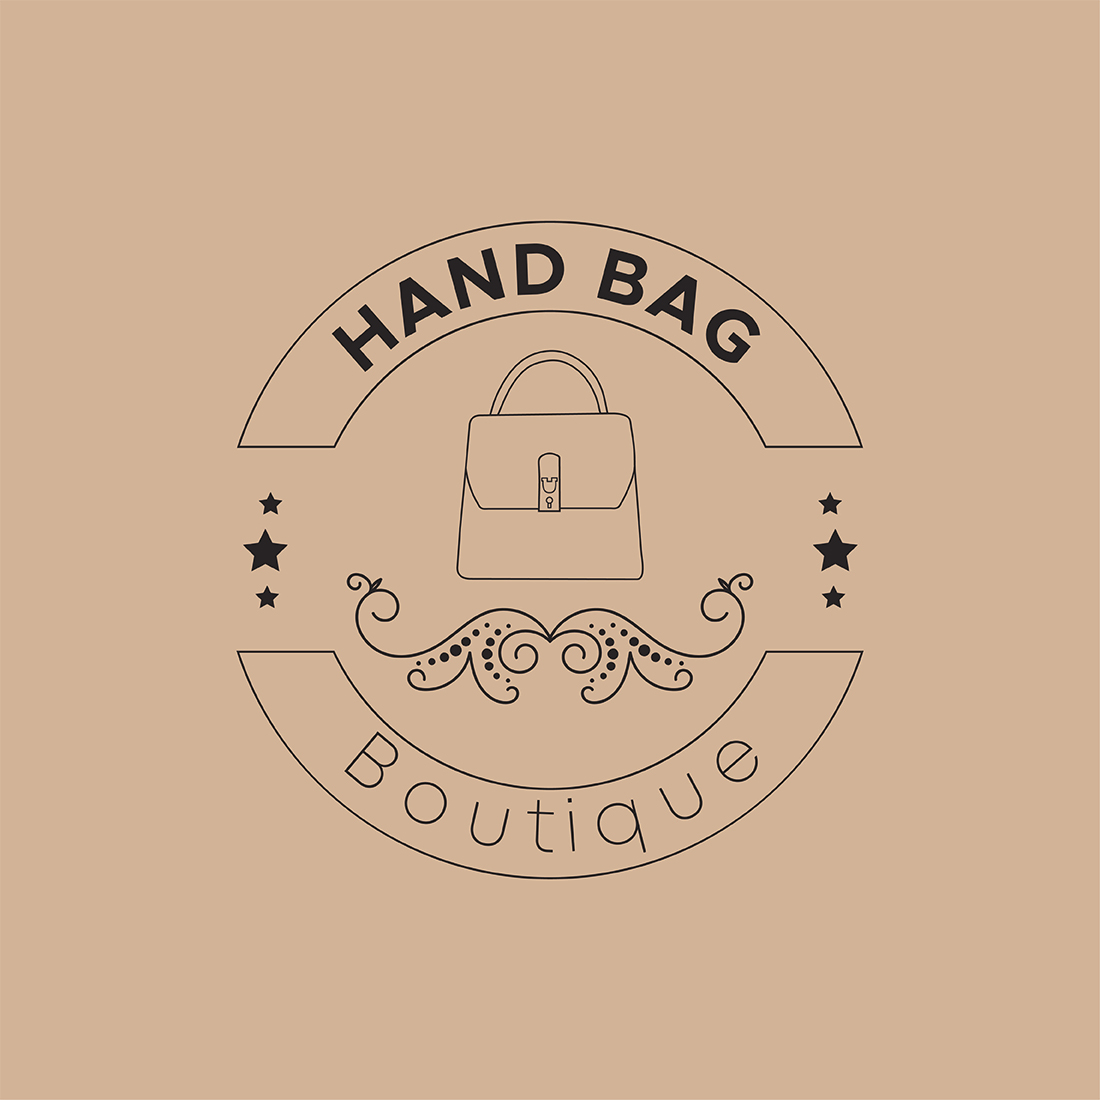 Hand Bag Boutique Logo Preview Image.